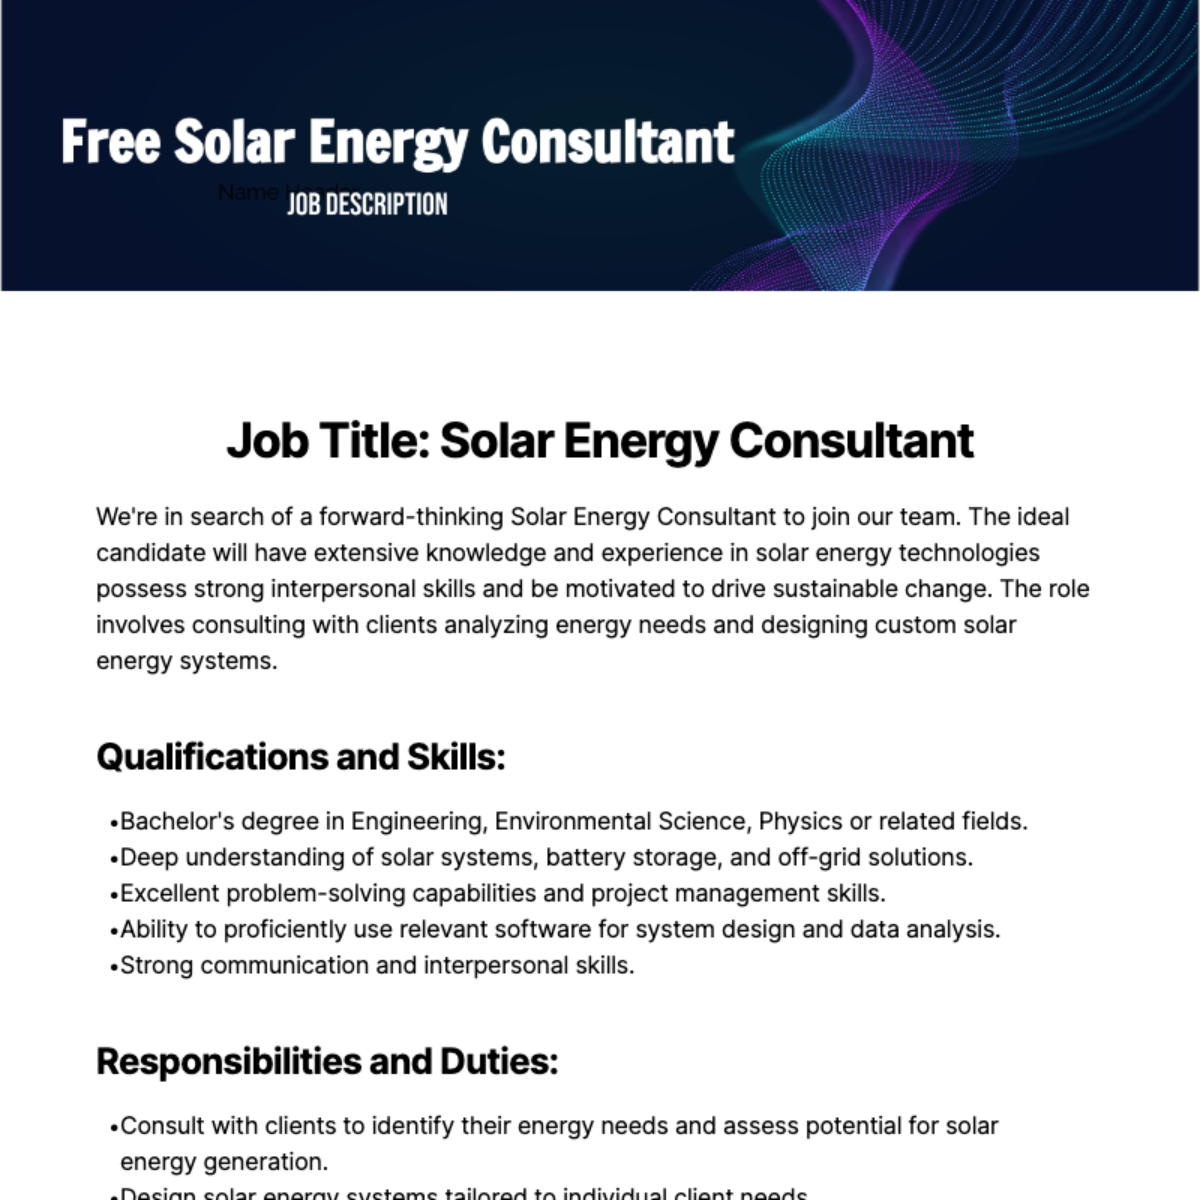 Free Solar Energy Consultant Job Description Template